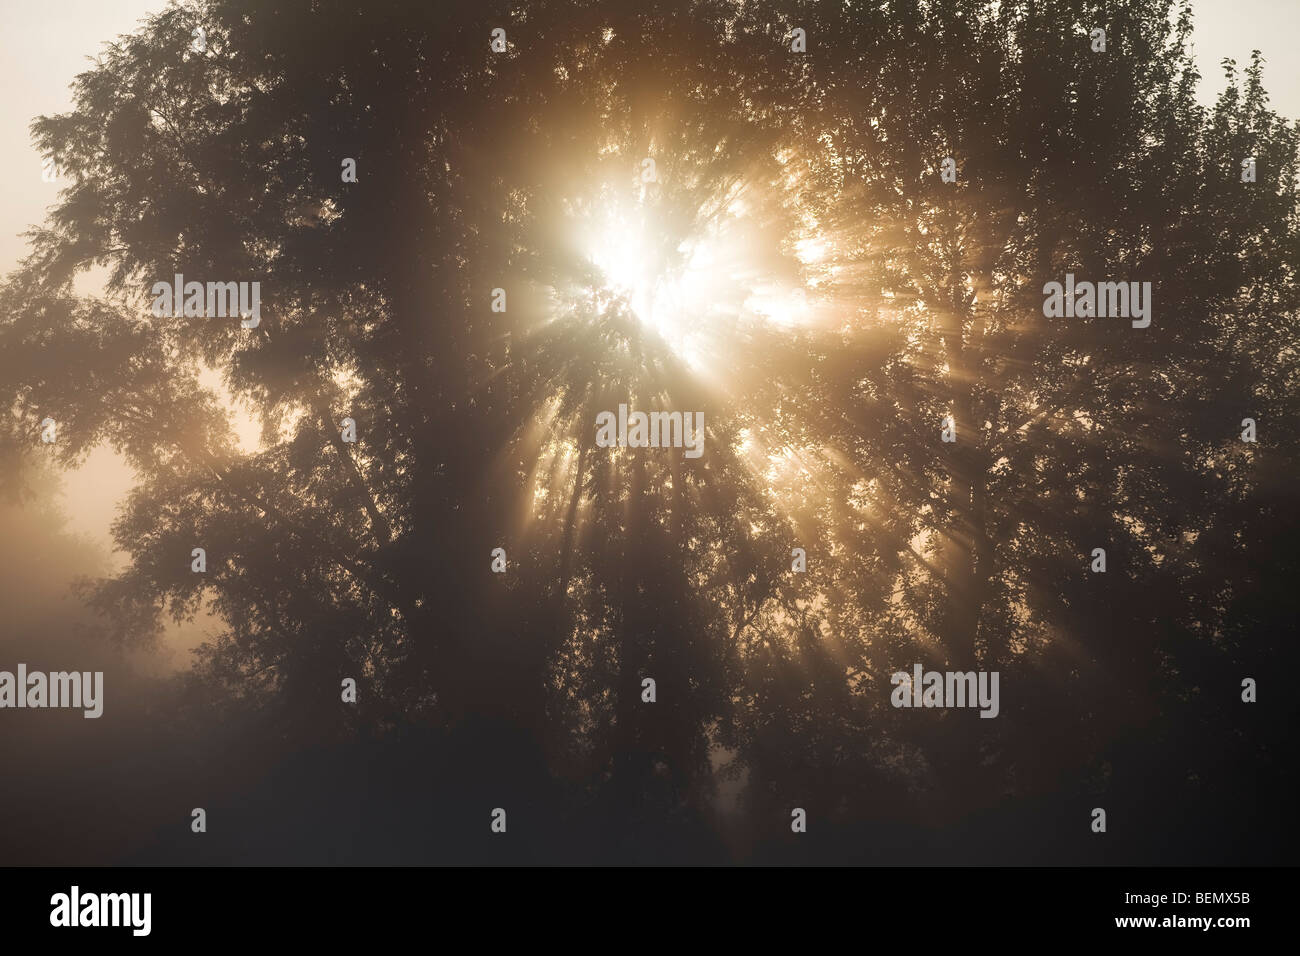 Sunbeams bursting through the mist and trees, Stock Photo